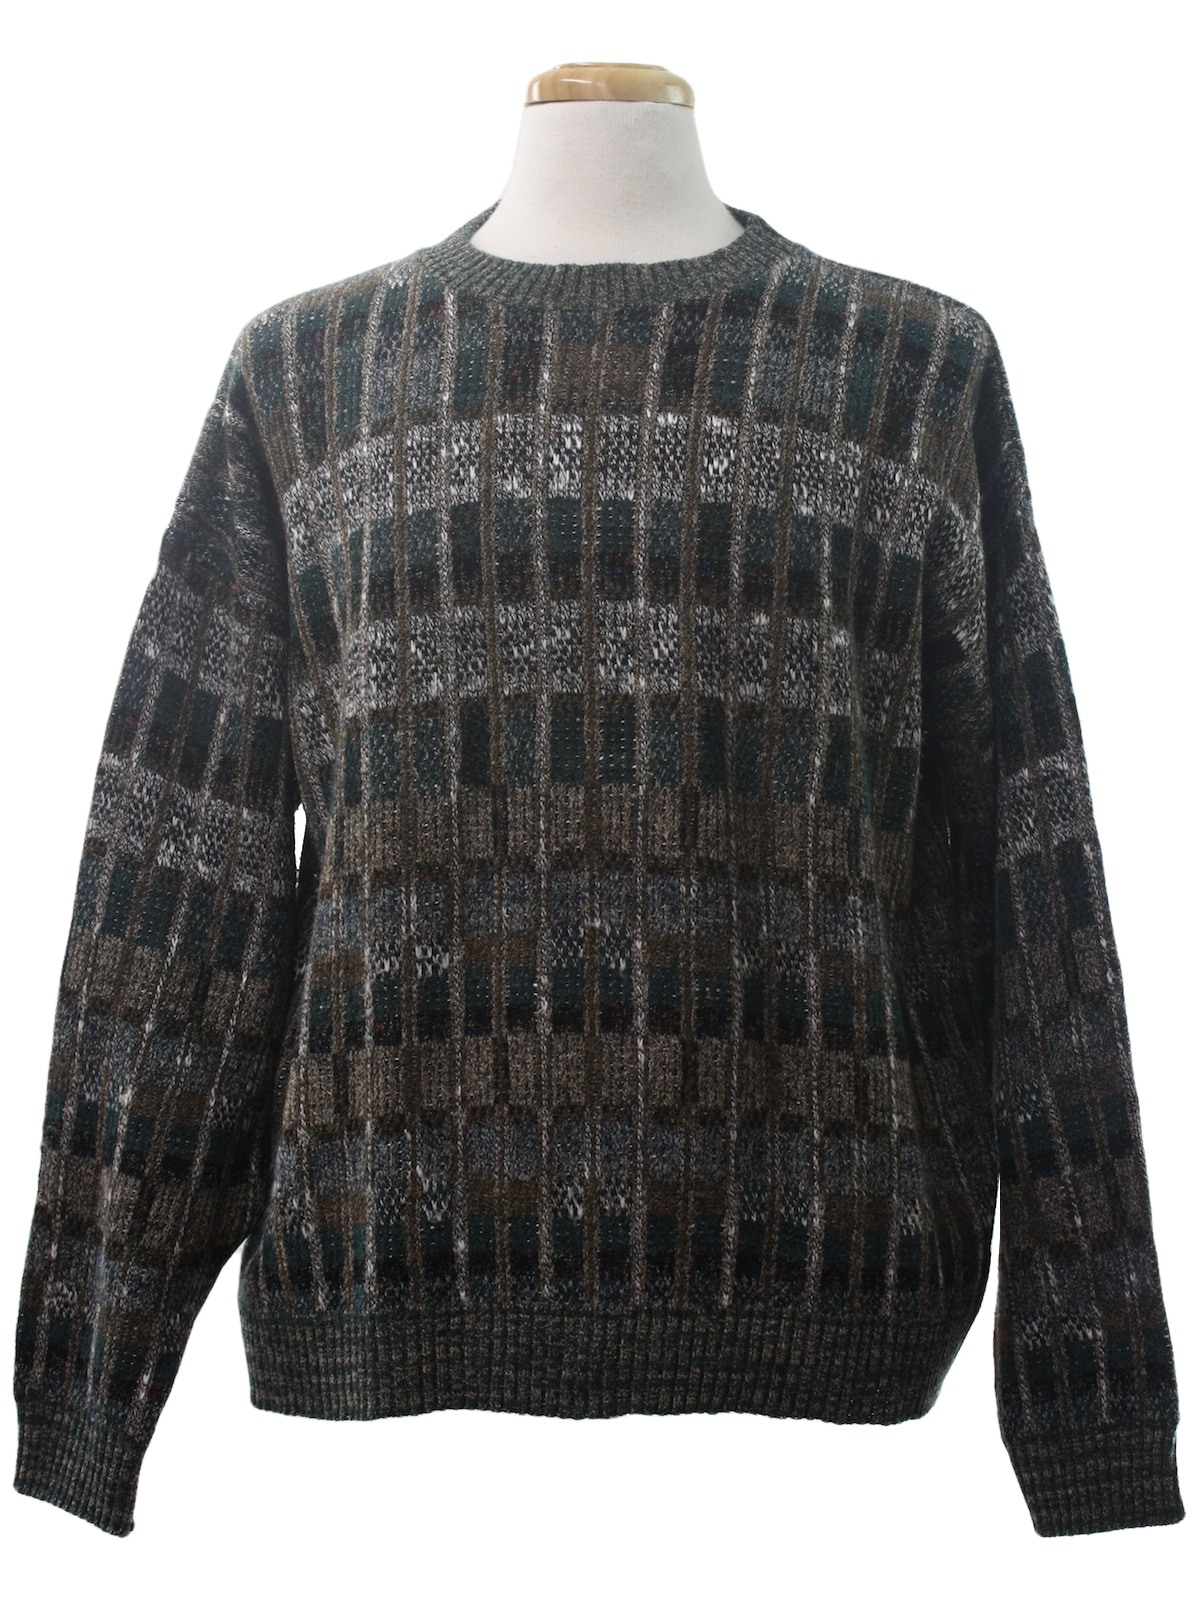 Retro 1980s Sweater: 80s -Protege- Mens brown, white, green and black ...